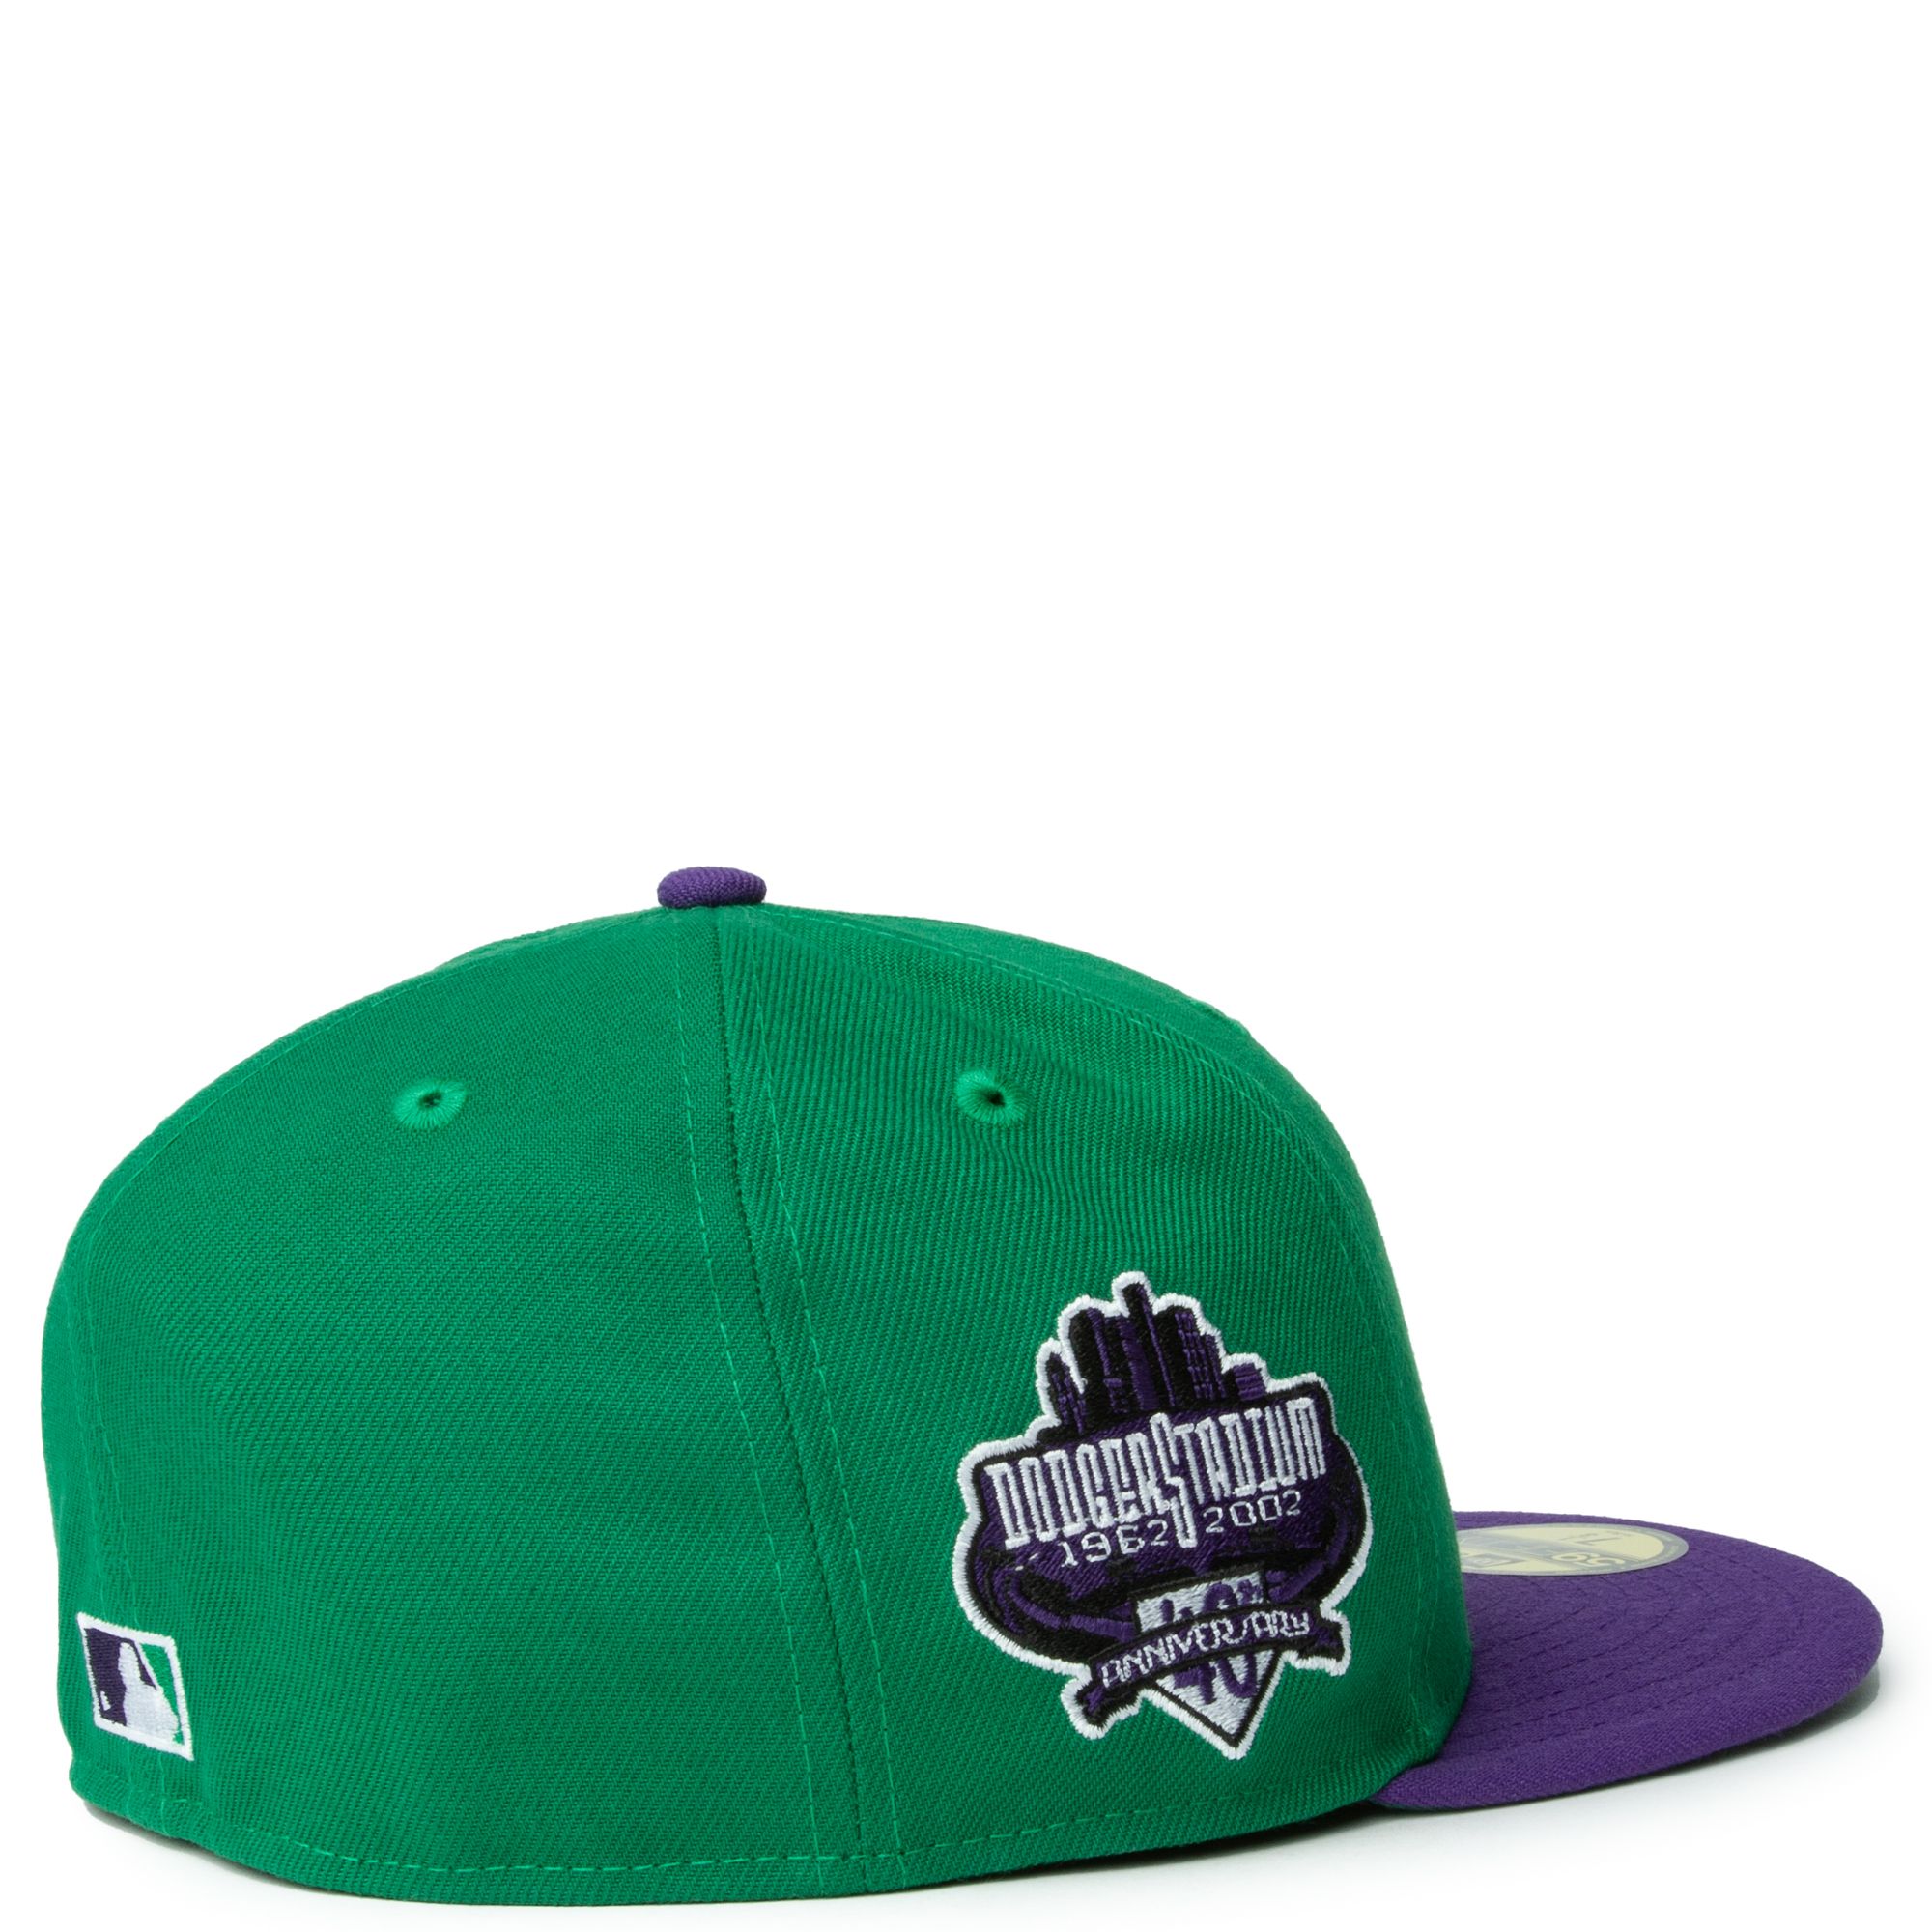 NewEra Purple Fitted Baseball Hat/Cap 59/50 size 6 7/8new,no tags